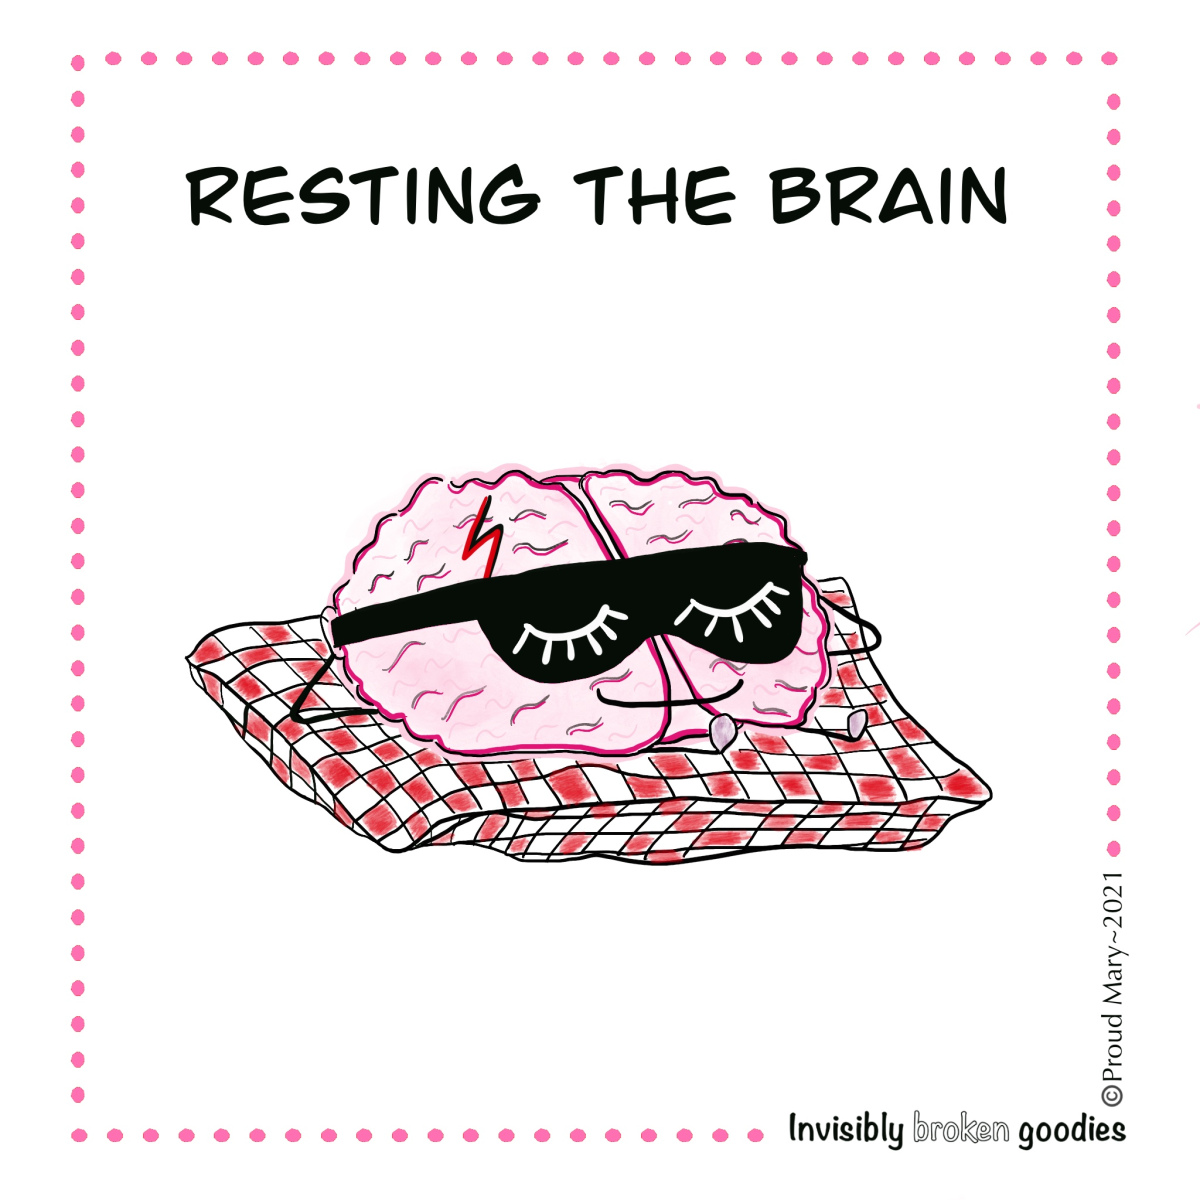 Brainy: Brain is resting